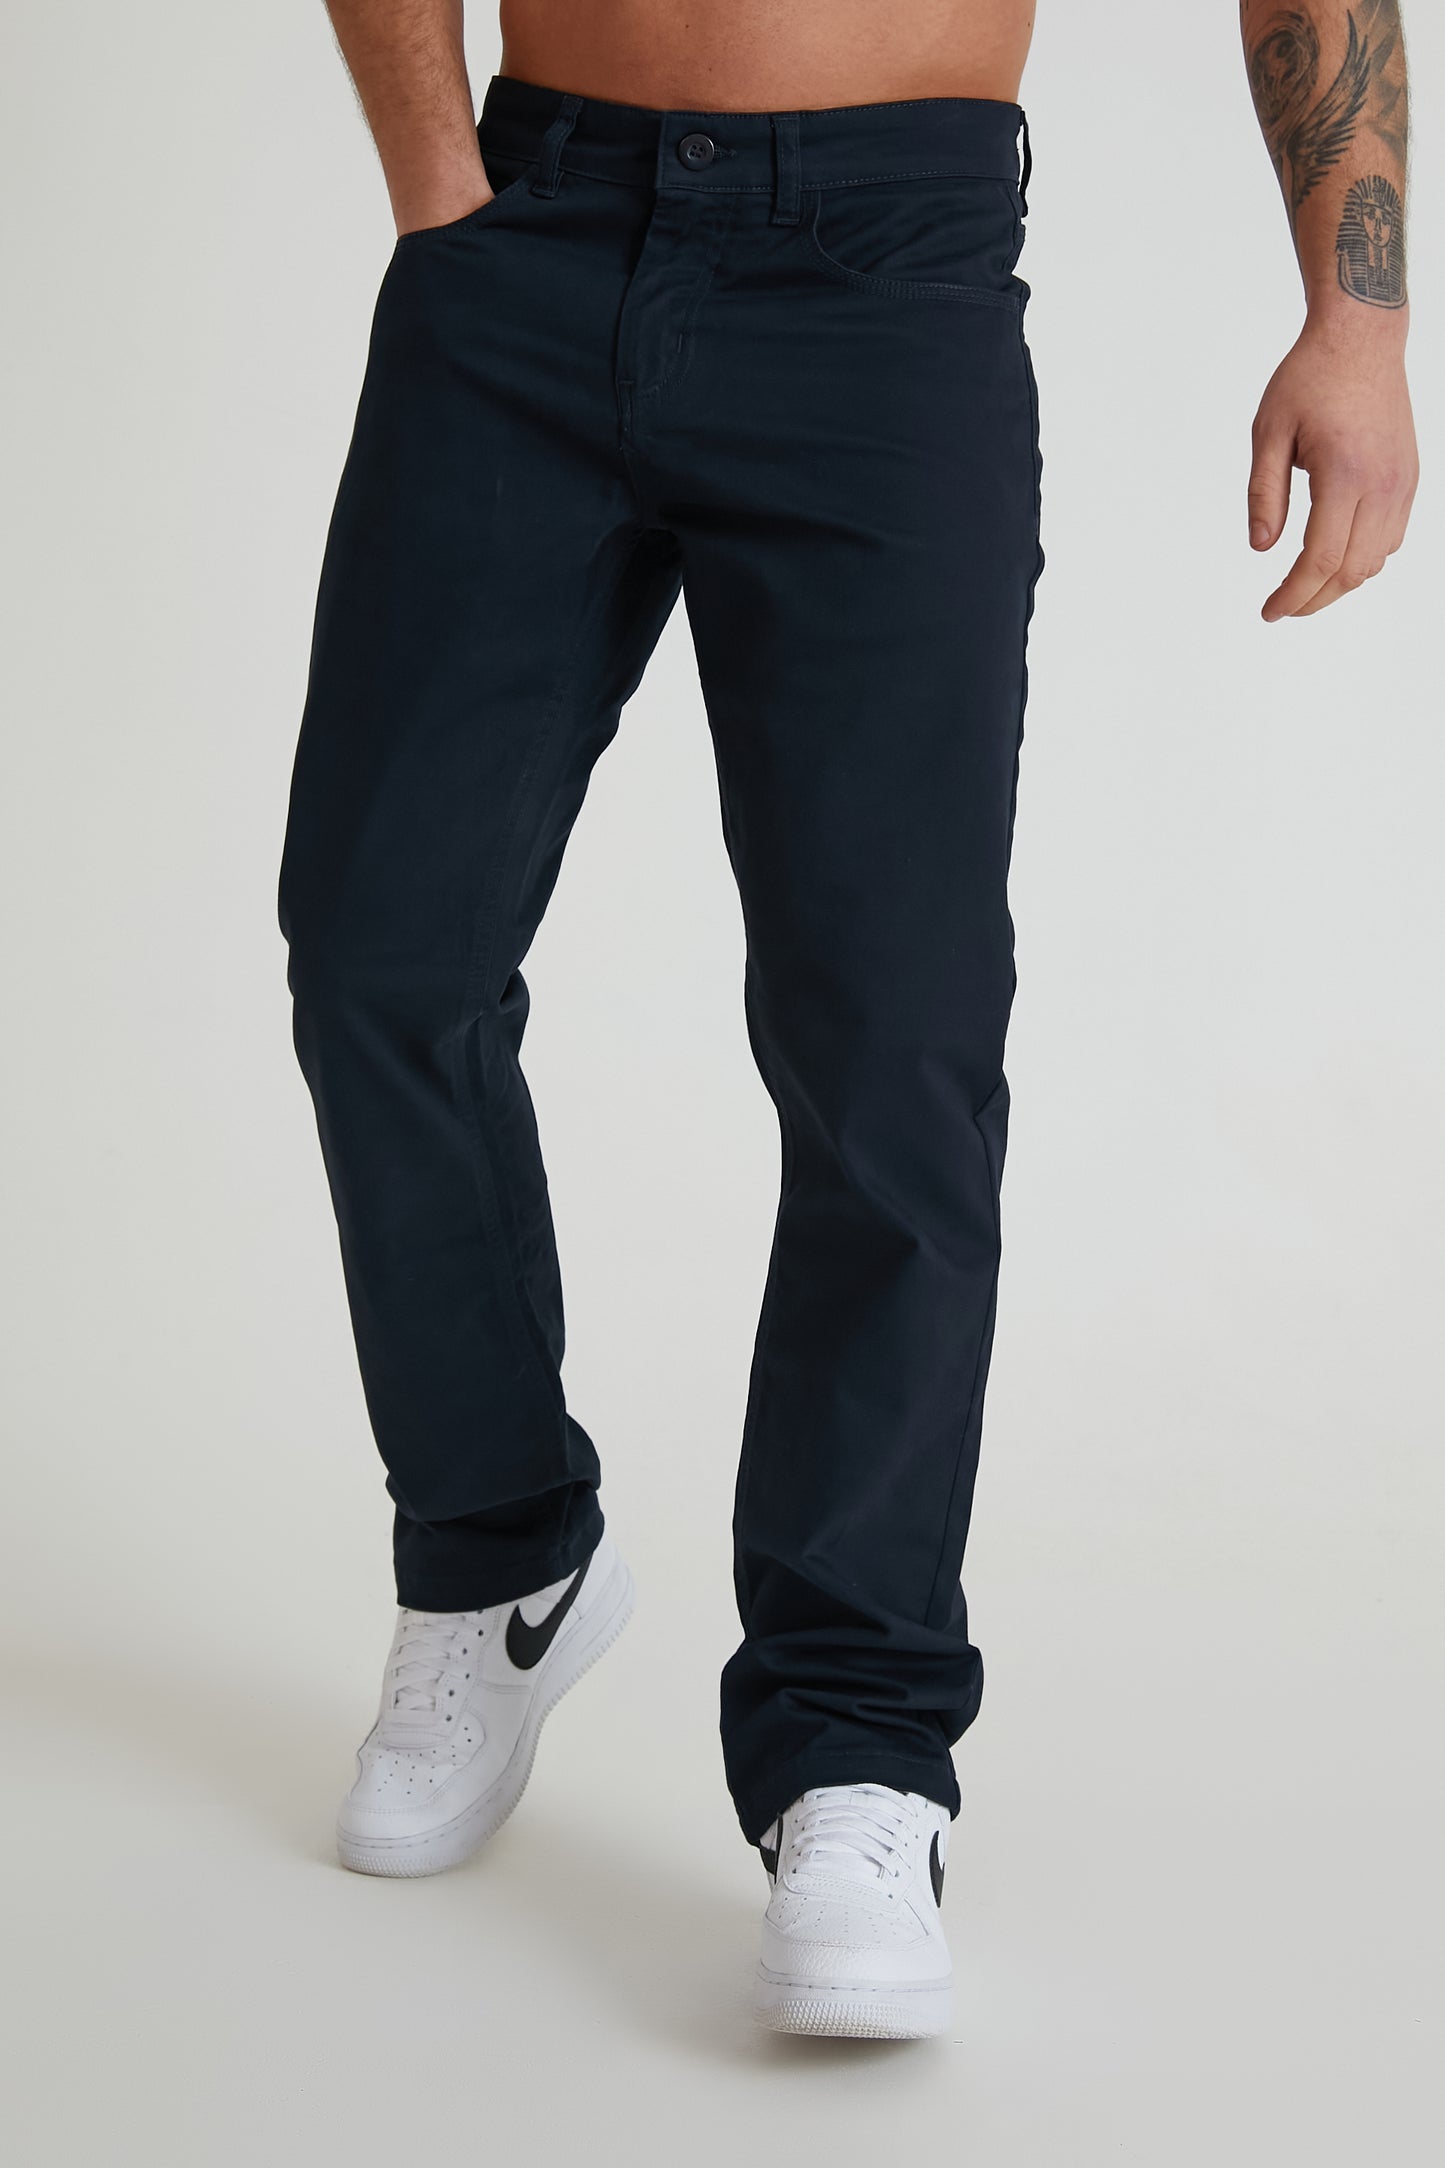 HAWKINS 5 pocket chino pant in premium cotton twill - NAVY - DML Jeans 